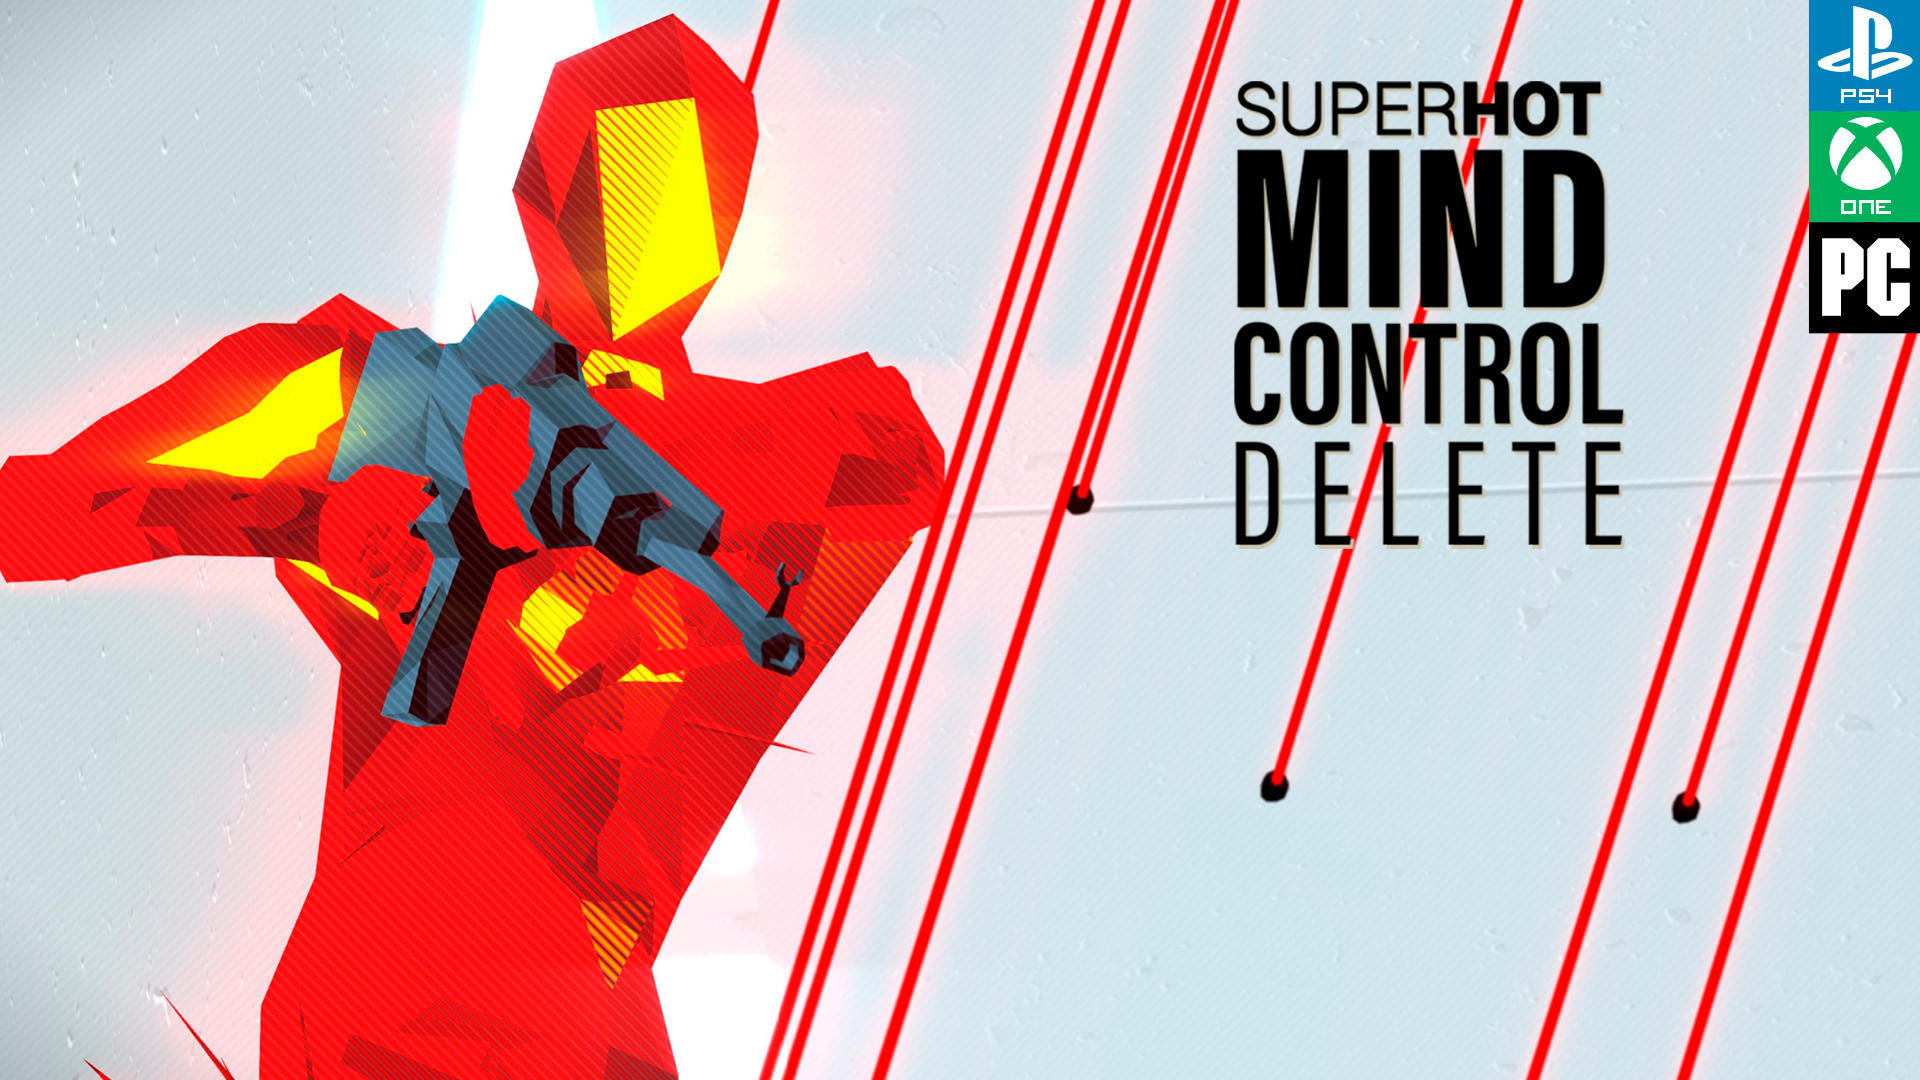 superhot mind control delete weapons